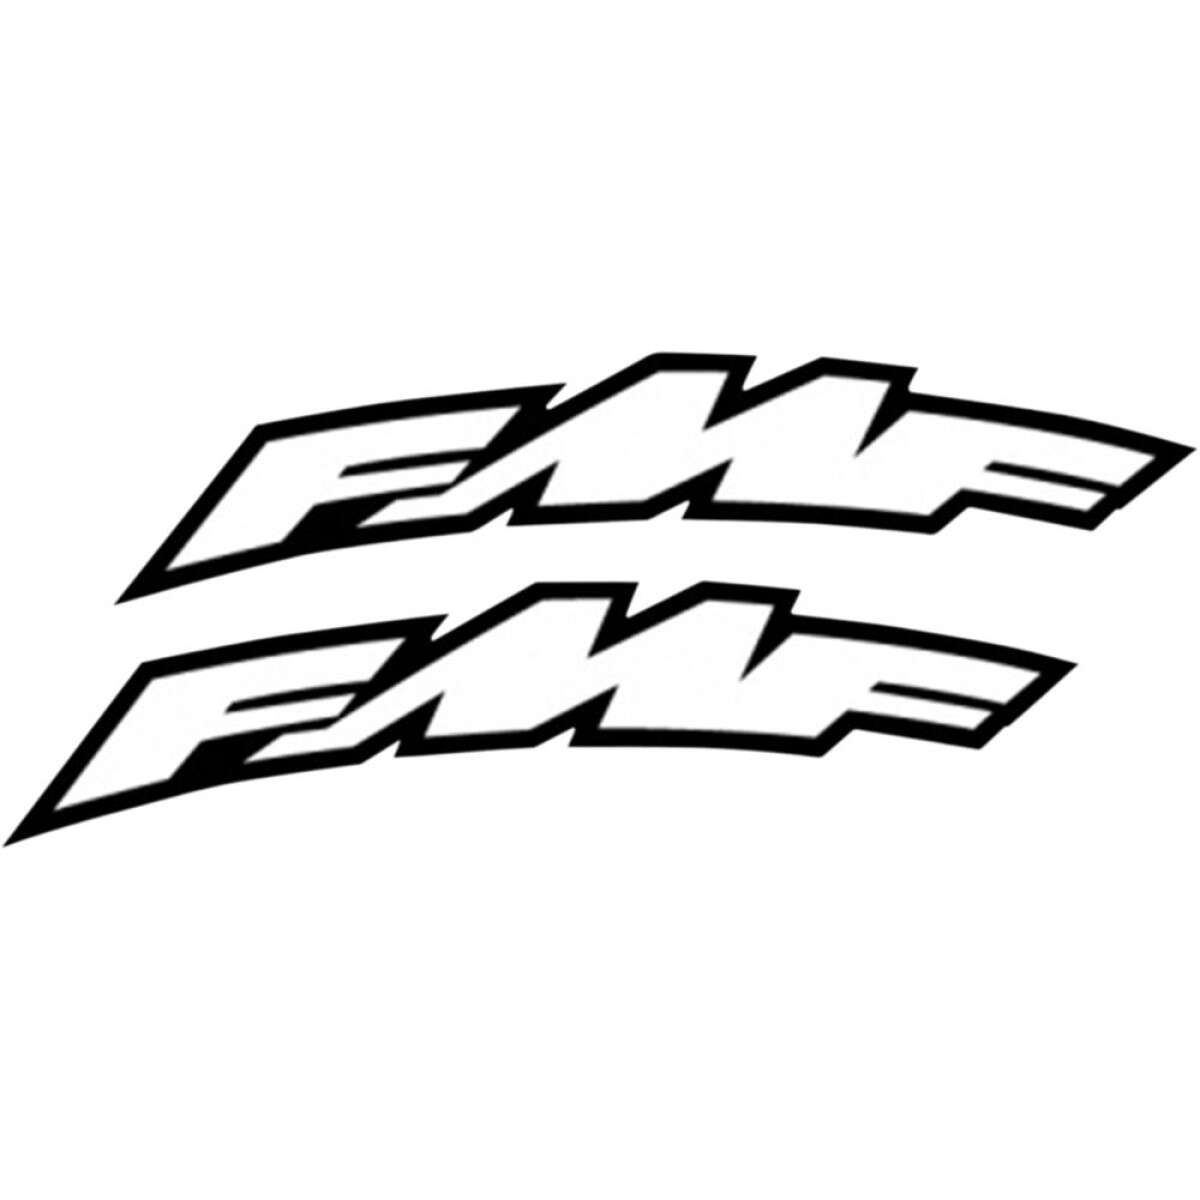 FMF Racing MX Logo Decal Sticker Choose Size 3M LAMINATED BUY 3 GET 1 FREE 